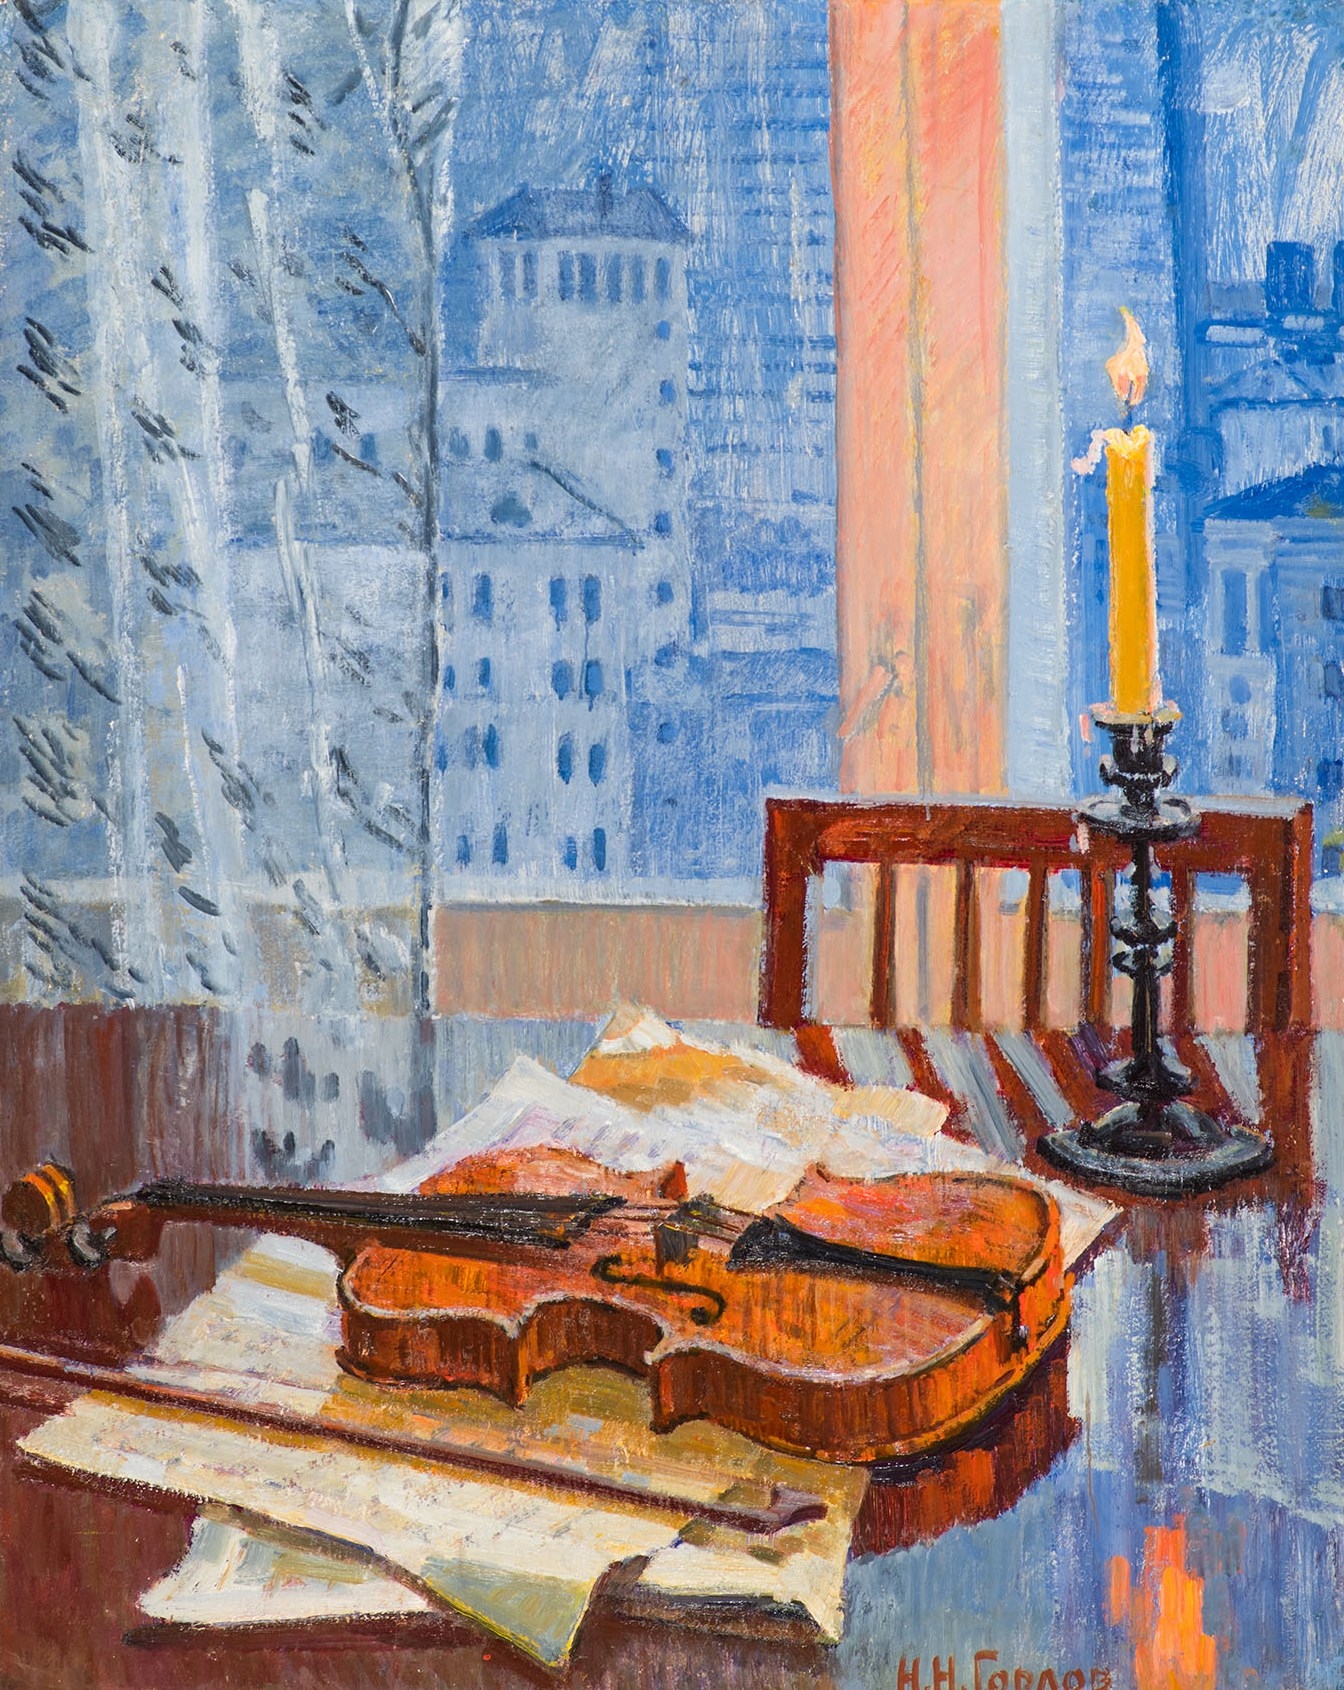 Violin and candle by Nicolaï Gorlov, 1970.